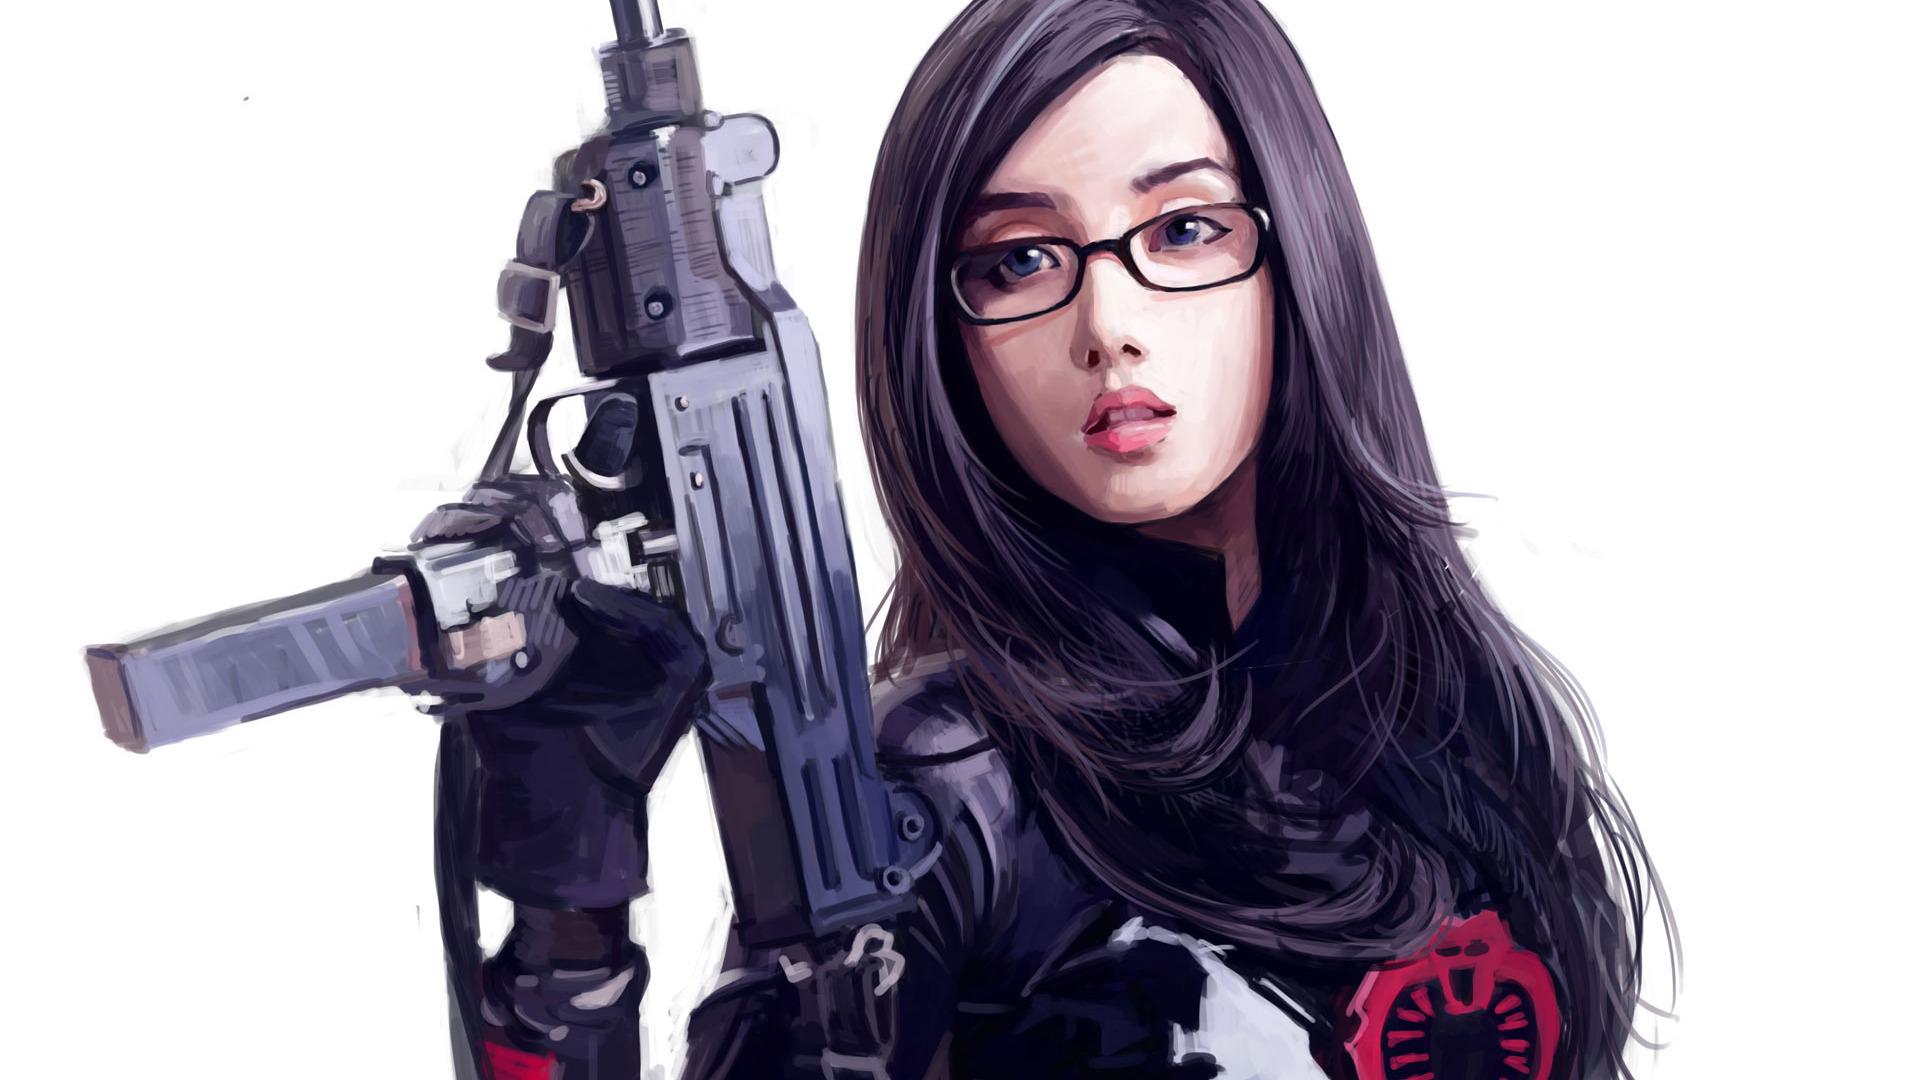 girl with gun wallpaper,fictional character